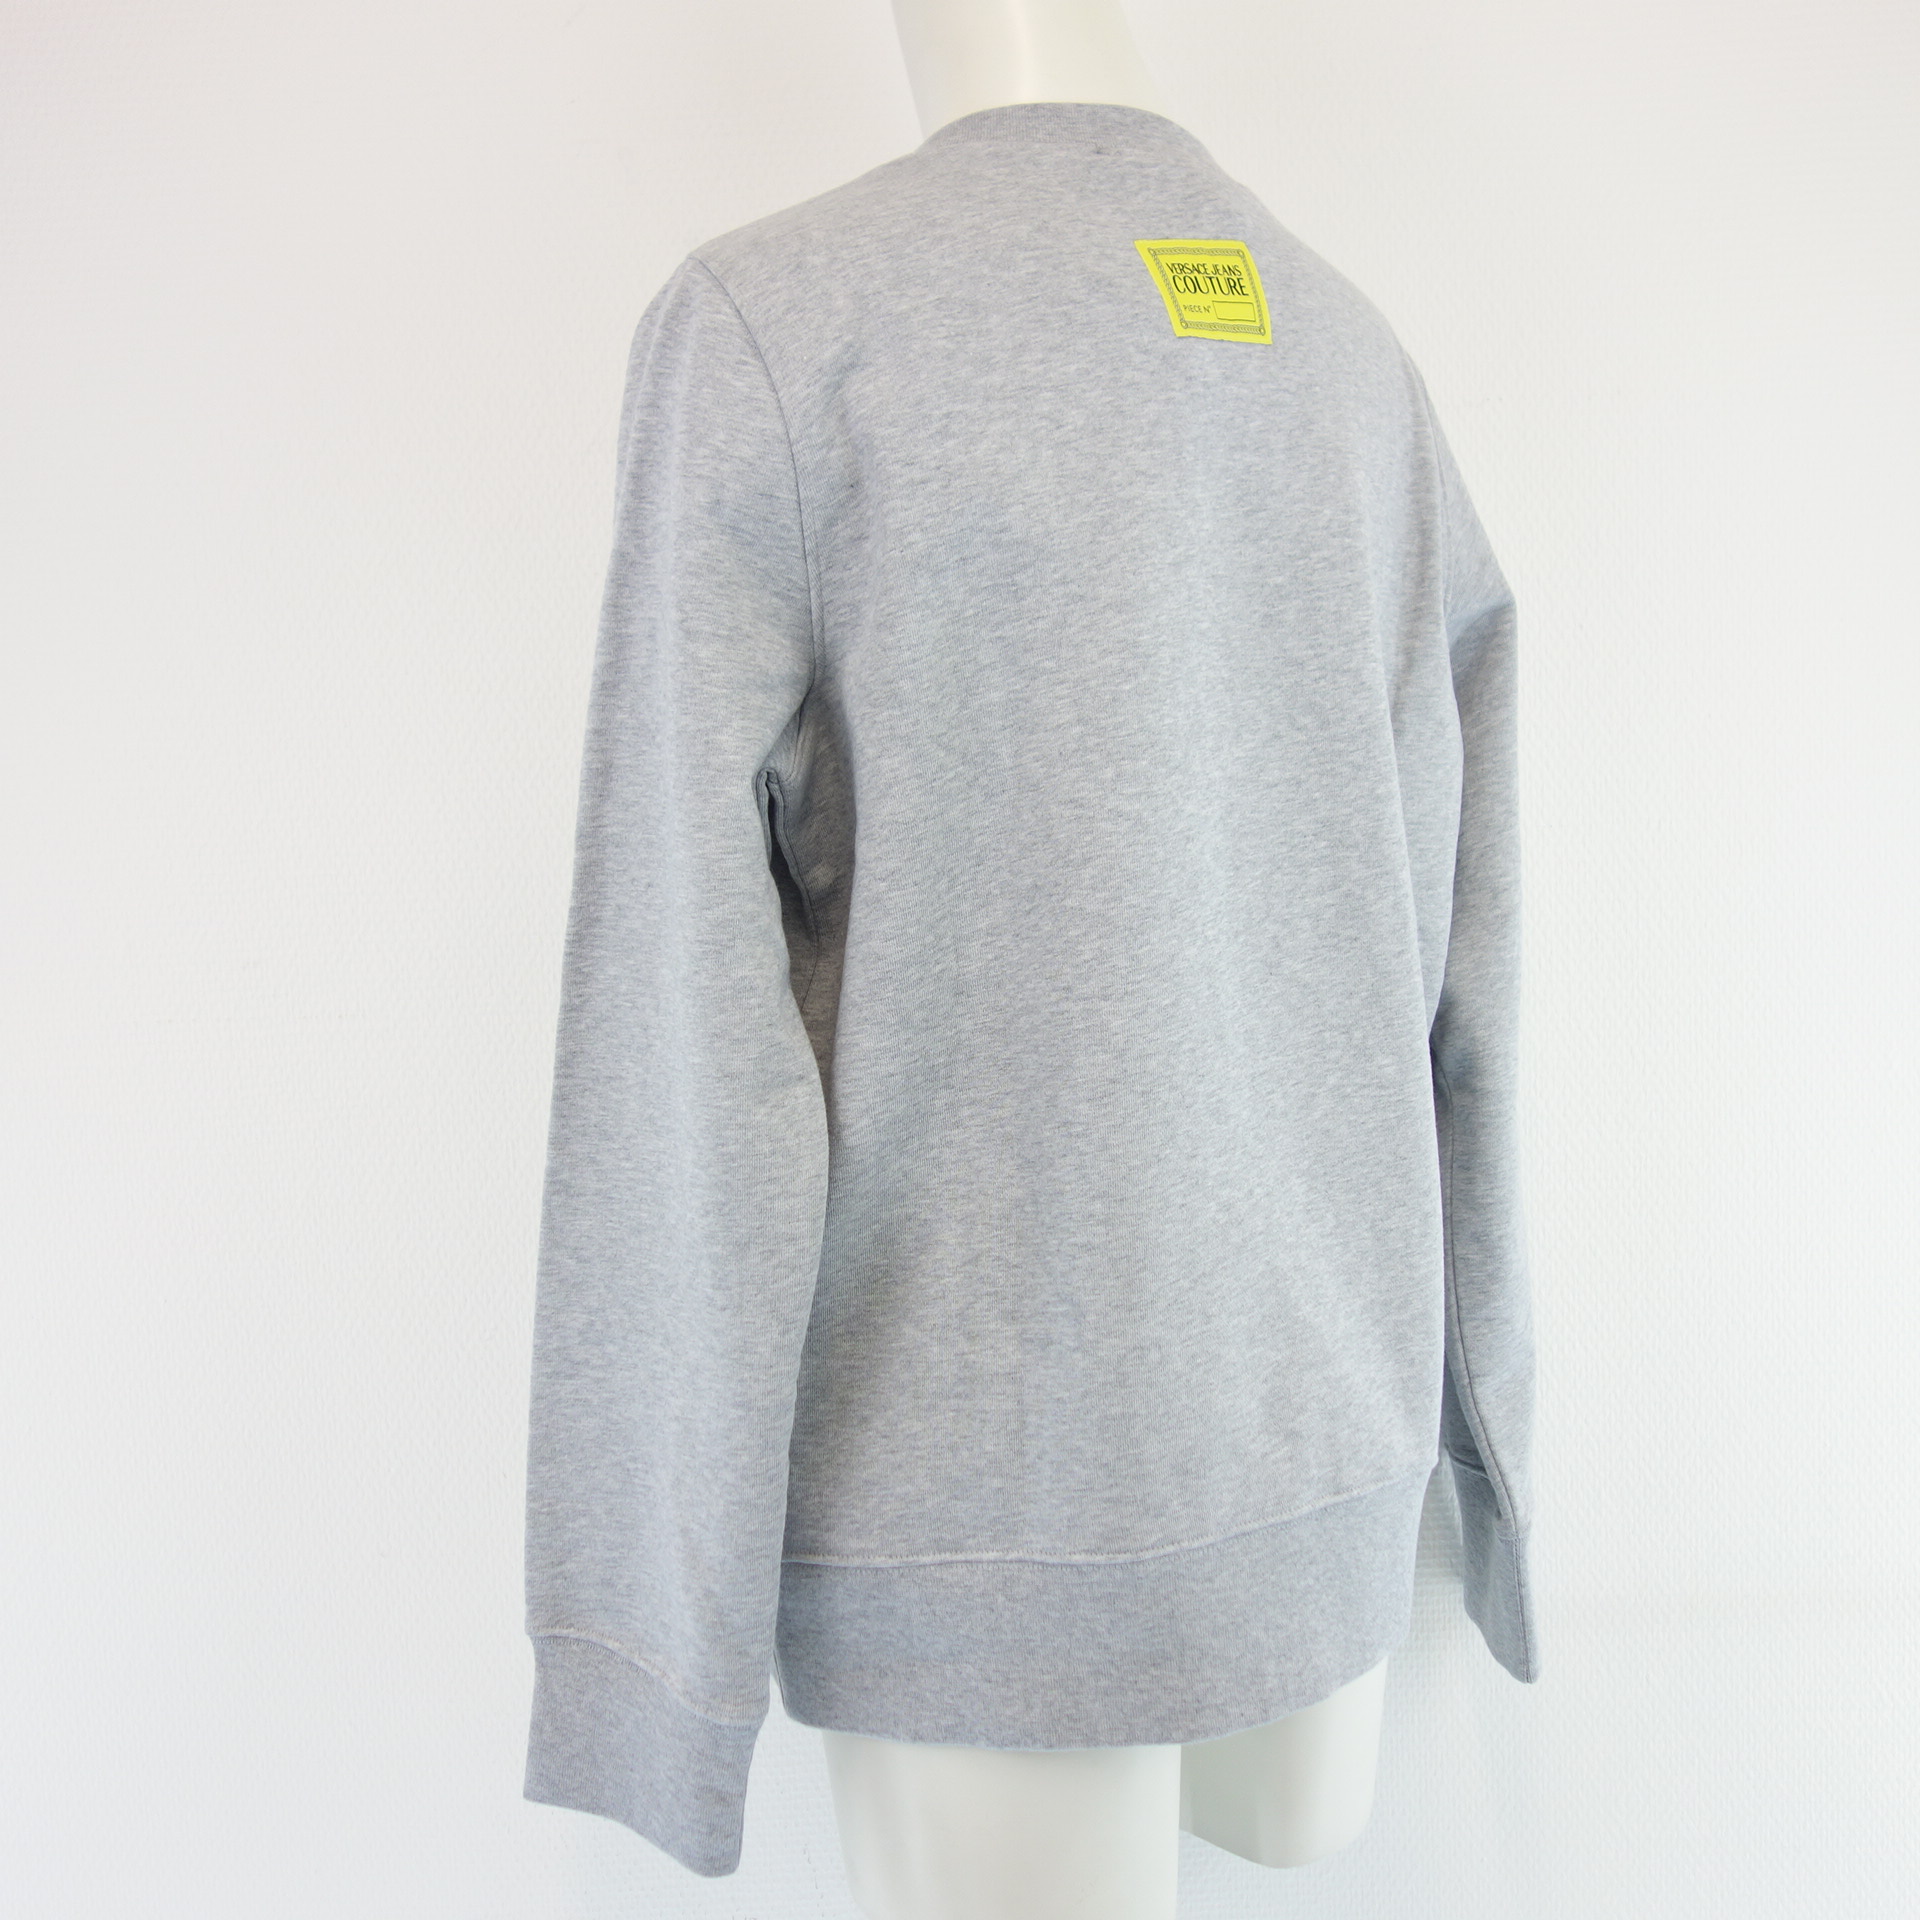 VERSACE JEANS COUTURE Damen Sweatshirt Sweat Shirt Pullover Sweat Sweater Grau  Größe L 38 - 40